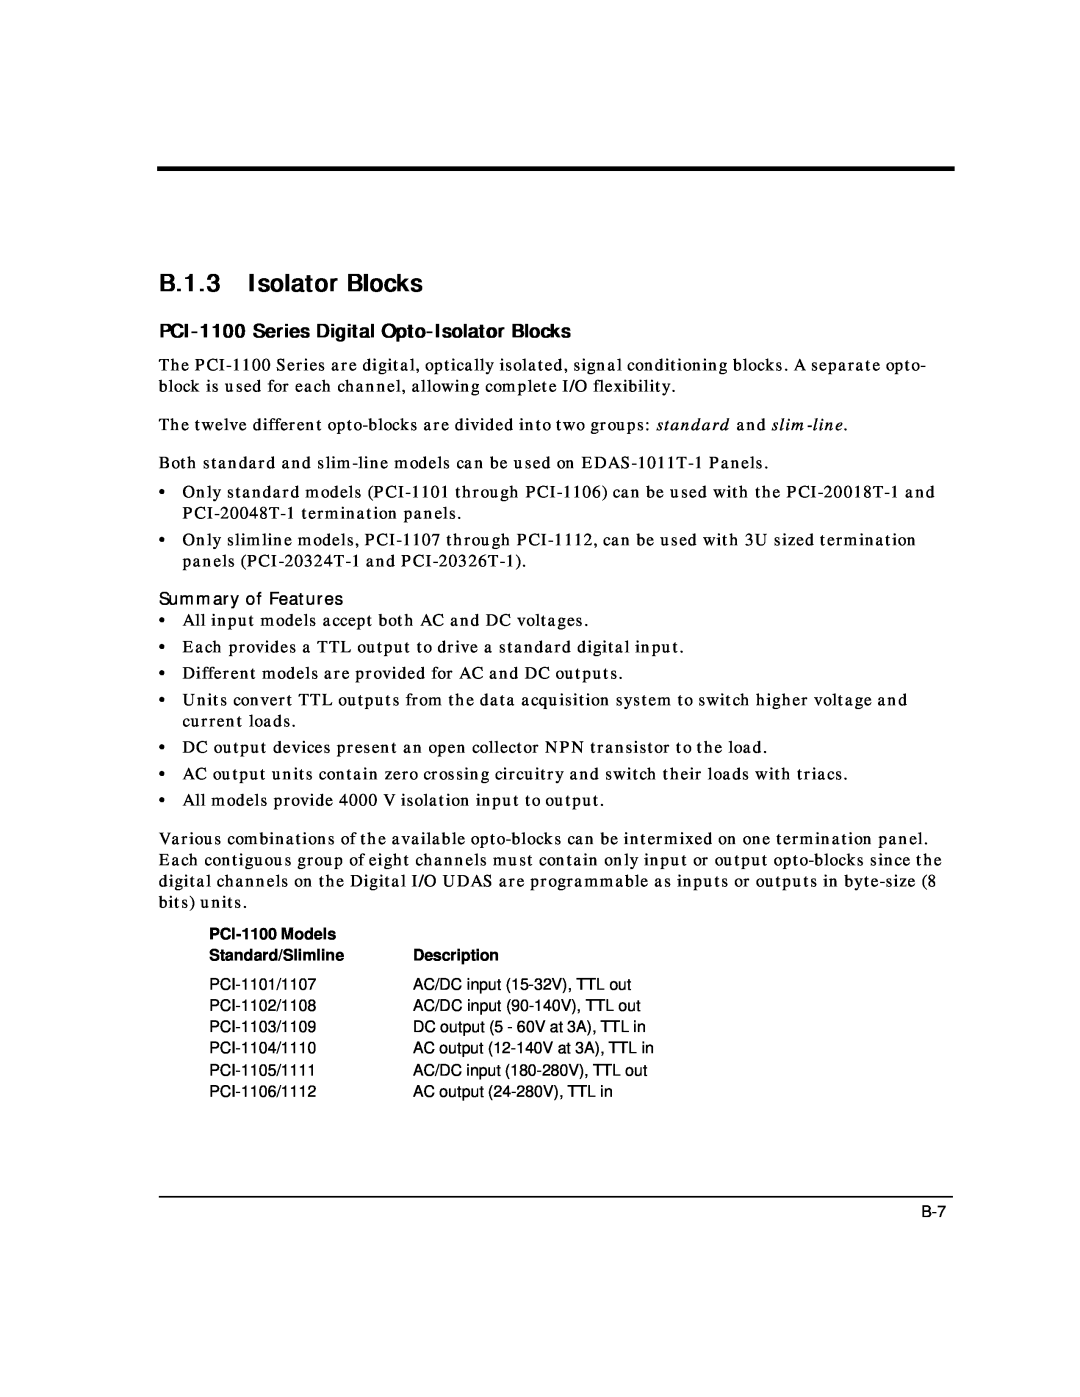 Intelligent Motion Systems UDAS-1001E user manual B.1.3 Isolator Blocks, PCI-1100 Series Digital Opto-Isolator Blocks 